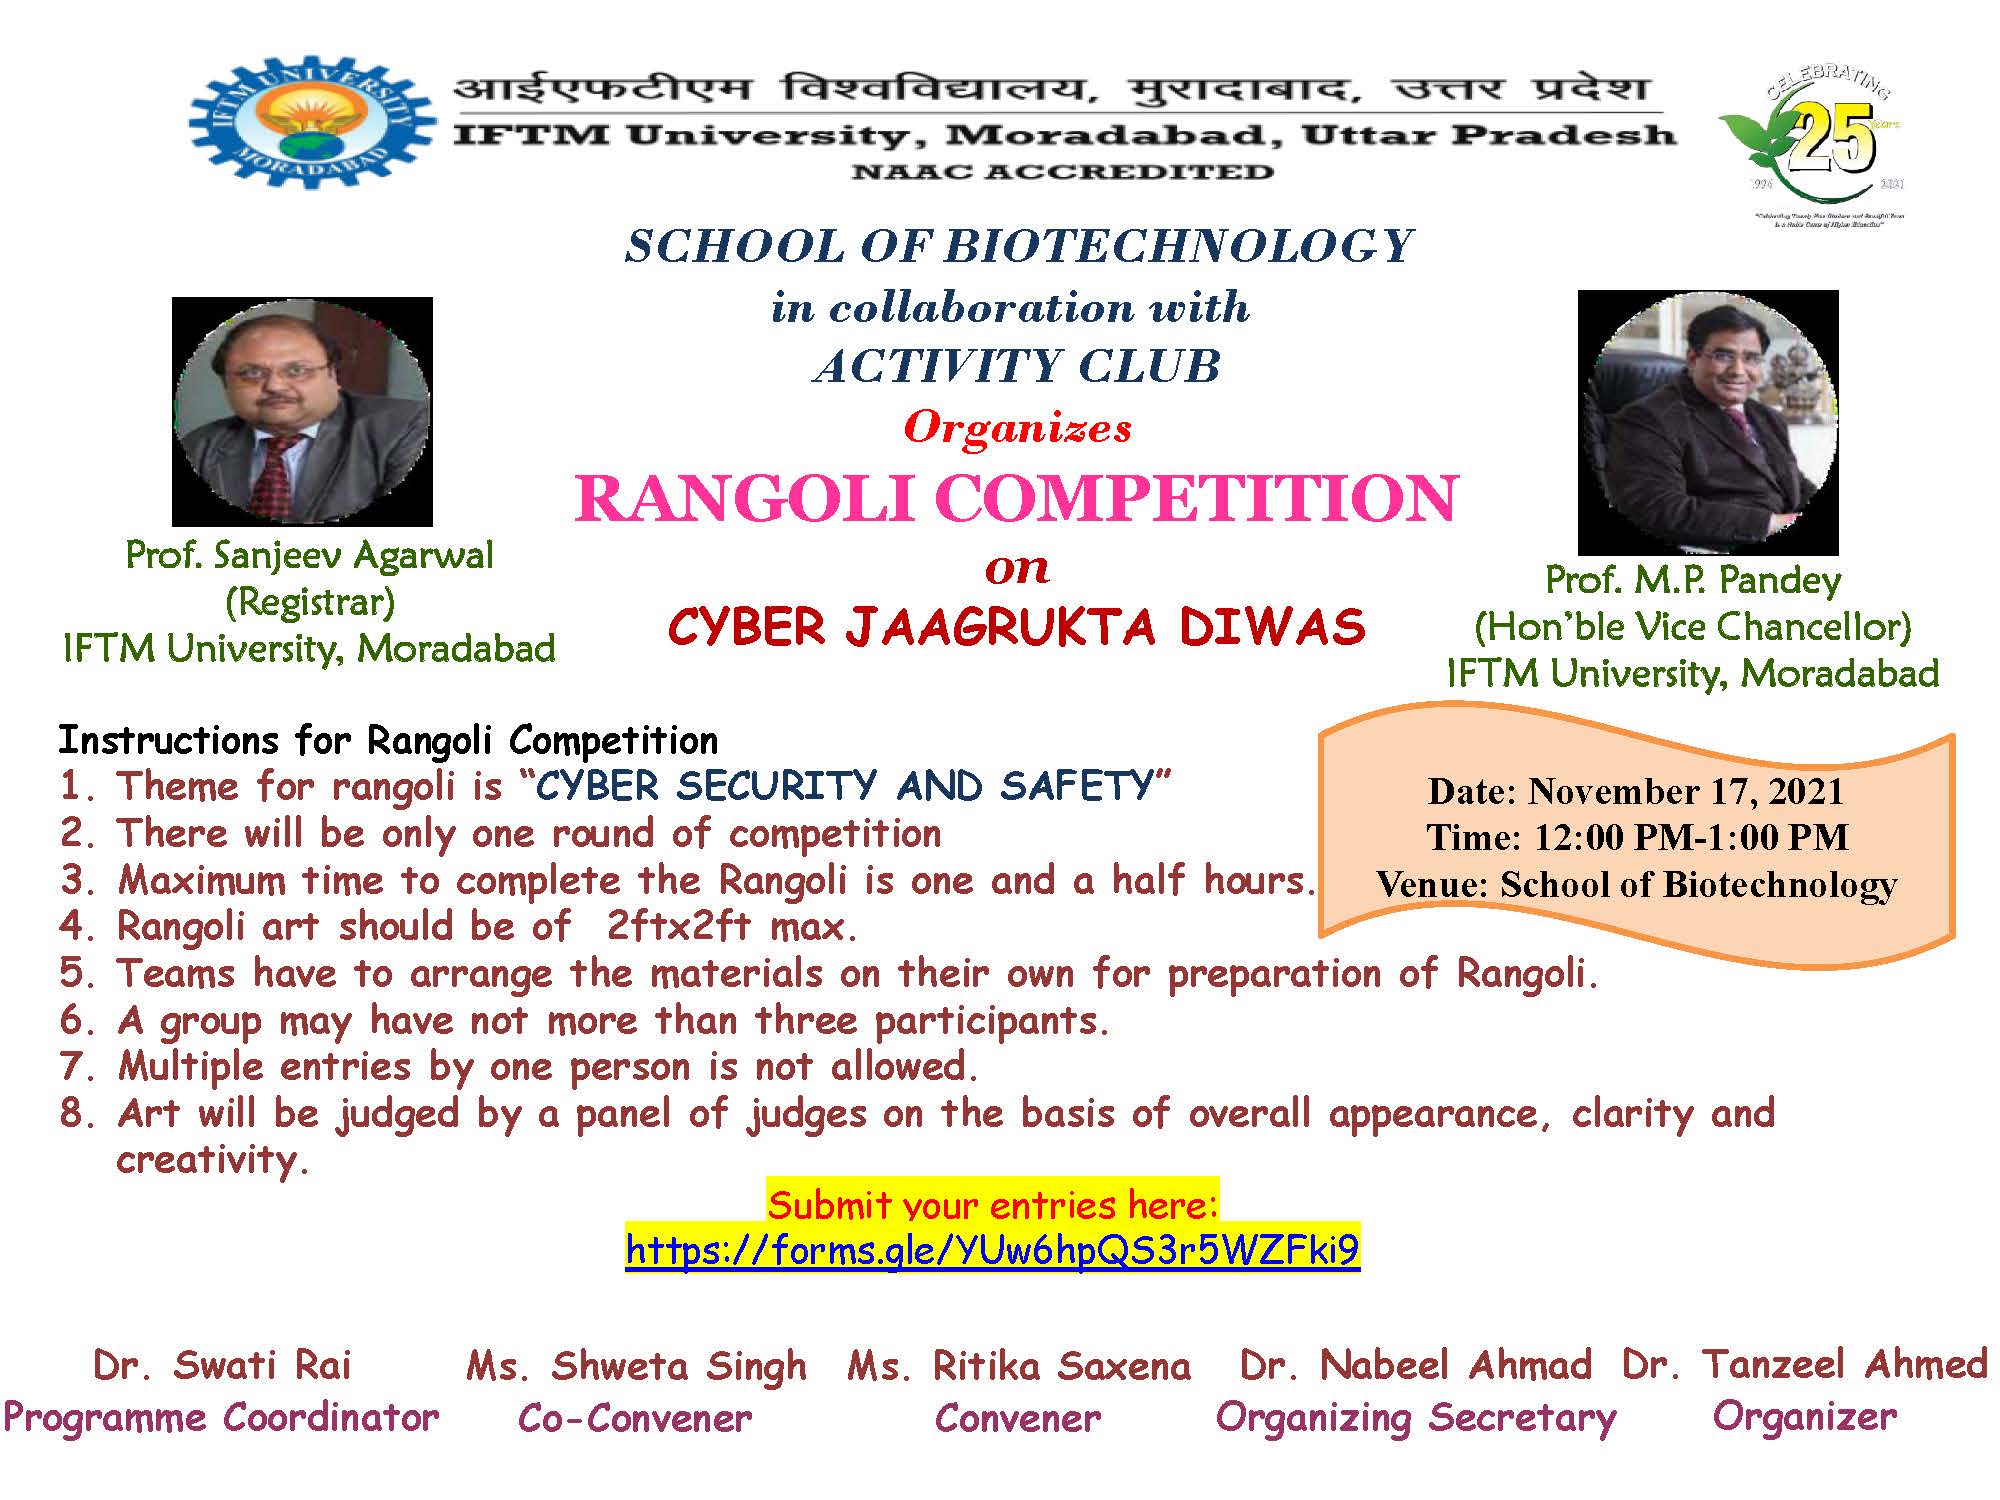 Rangoli Competition on Cyber Jagrukta Diwas